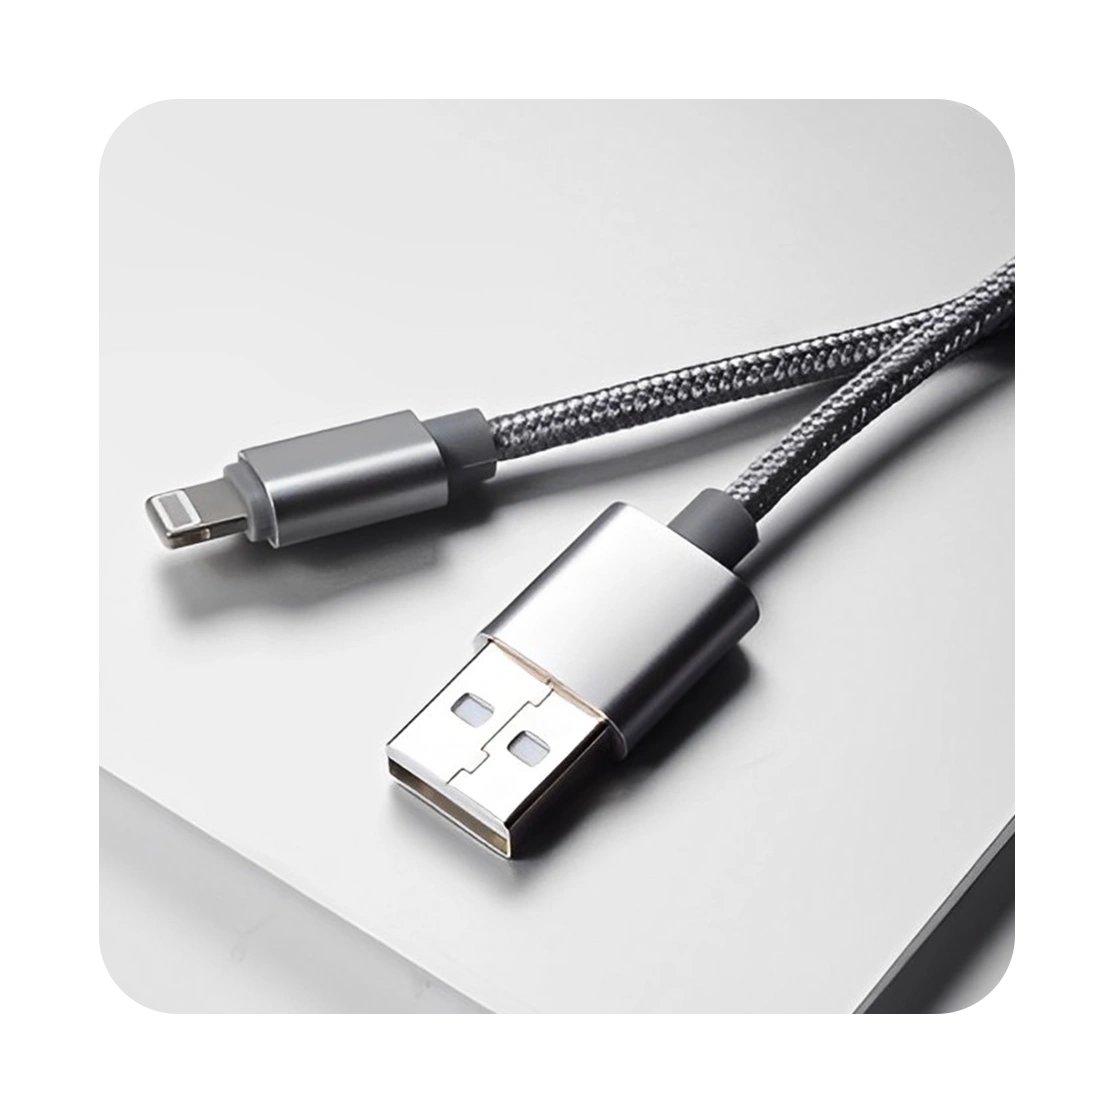 XO USB To Lightning Cable NB1